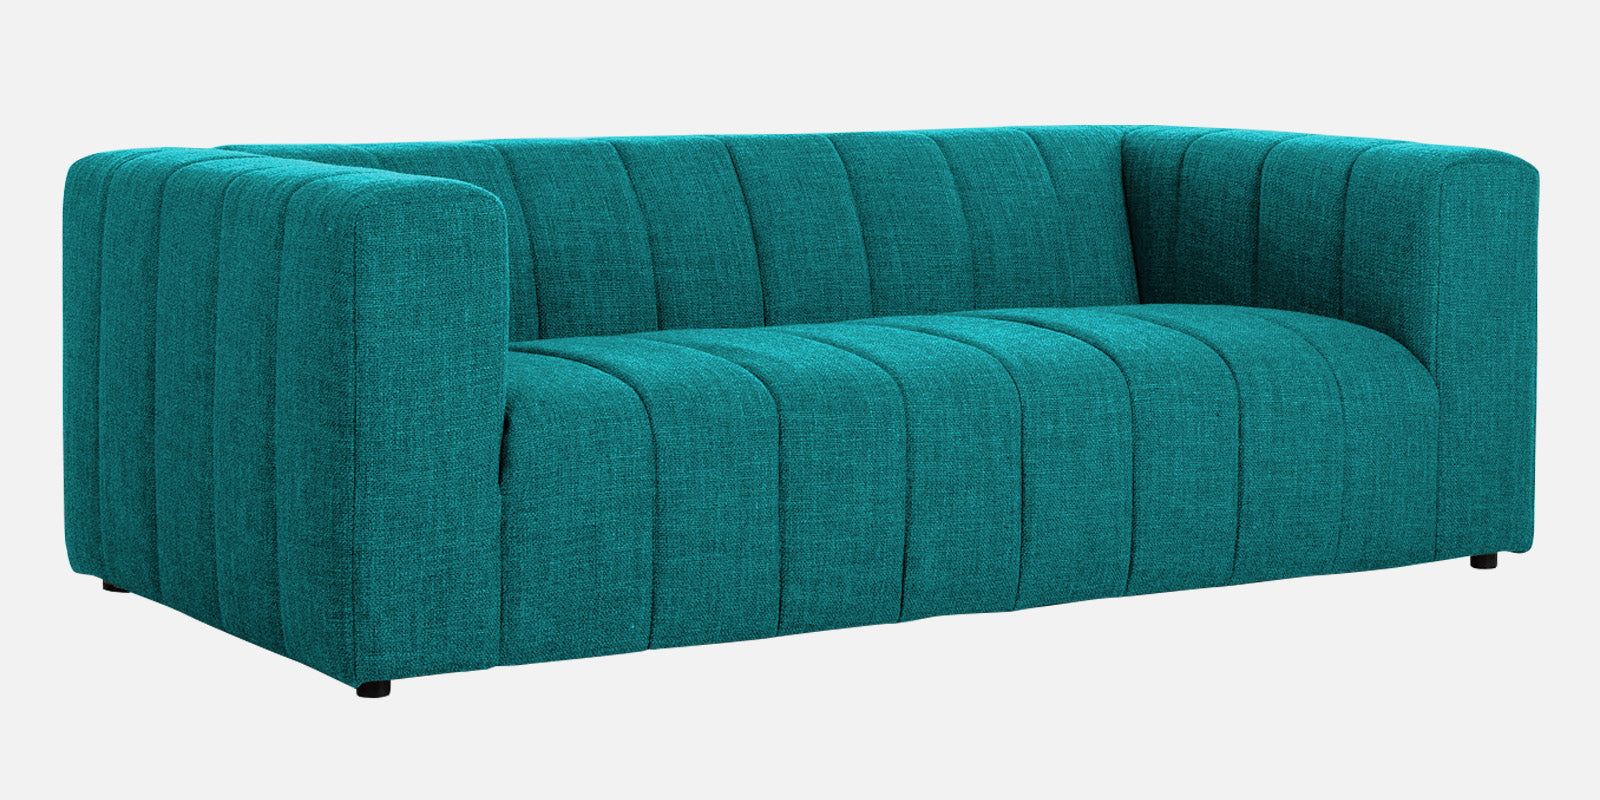 Lara Fabric 3 Seater Sofa in Sea Green Colour